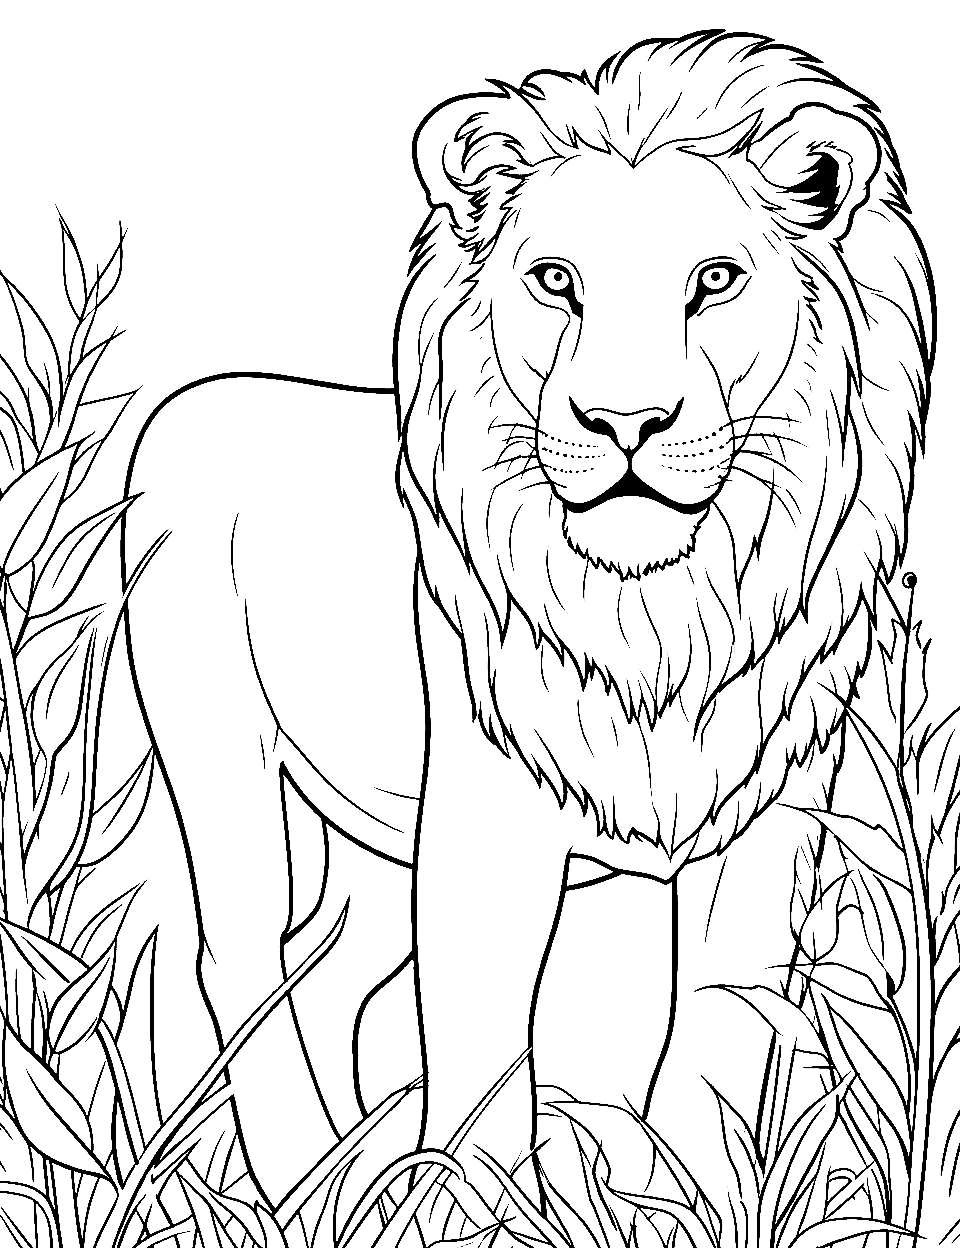 Lion drawing – drawing blog of HappyJo Drawings